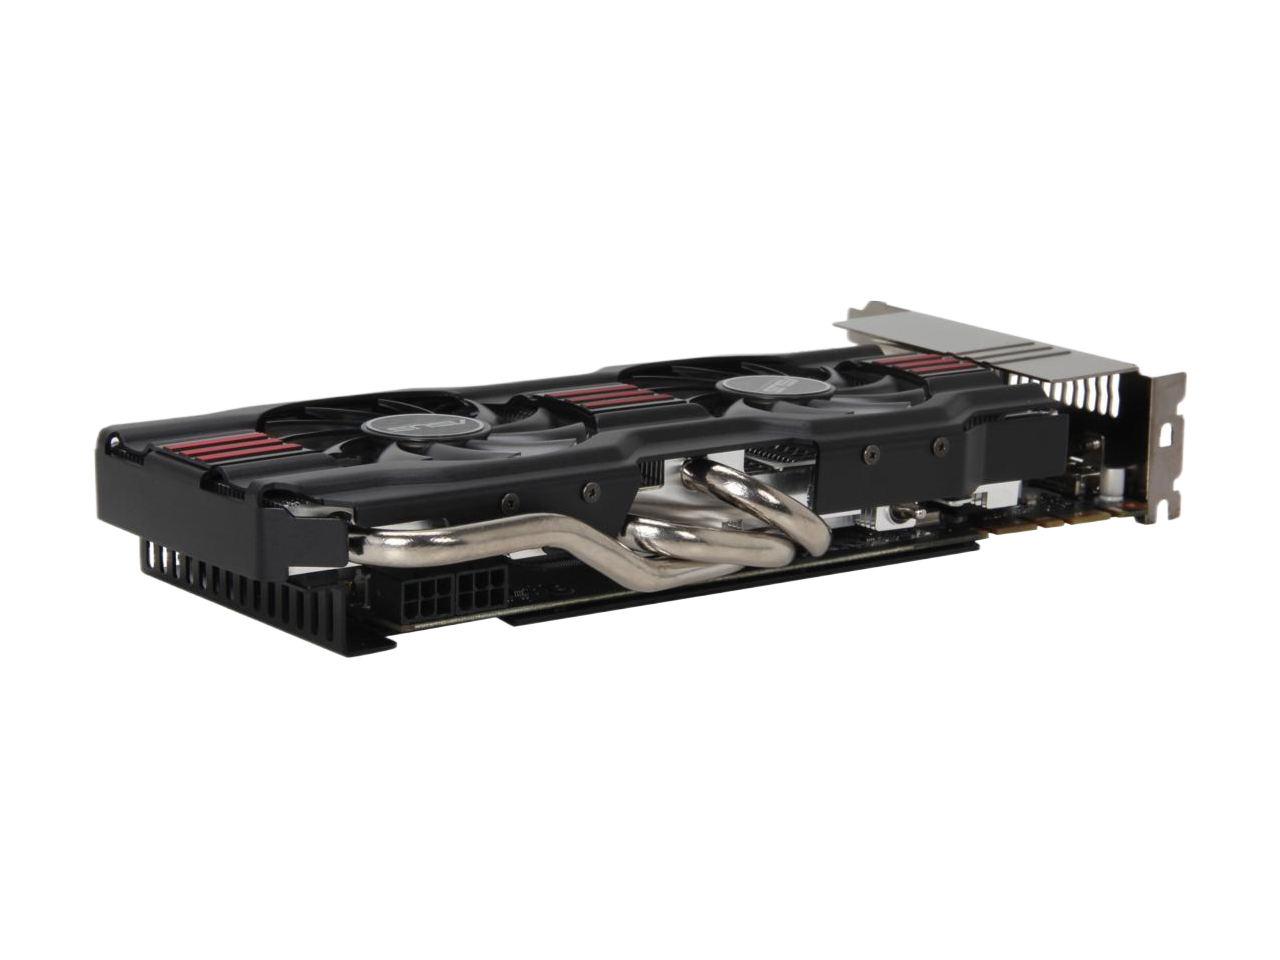 ASUS GeForce GTX 670 2GB GDDR5 PCI Express 3.0 x16 SLI Support Video Card GTX670-DC2-2GD5